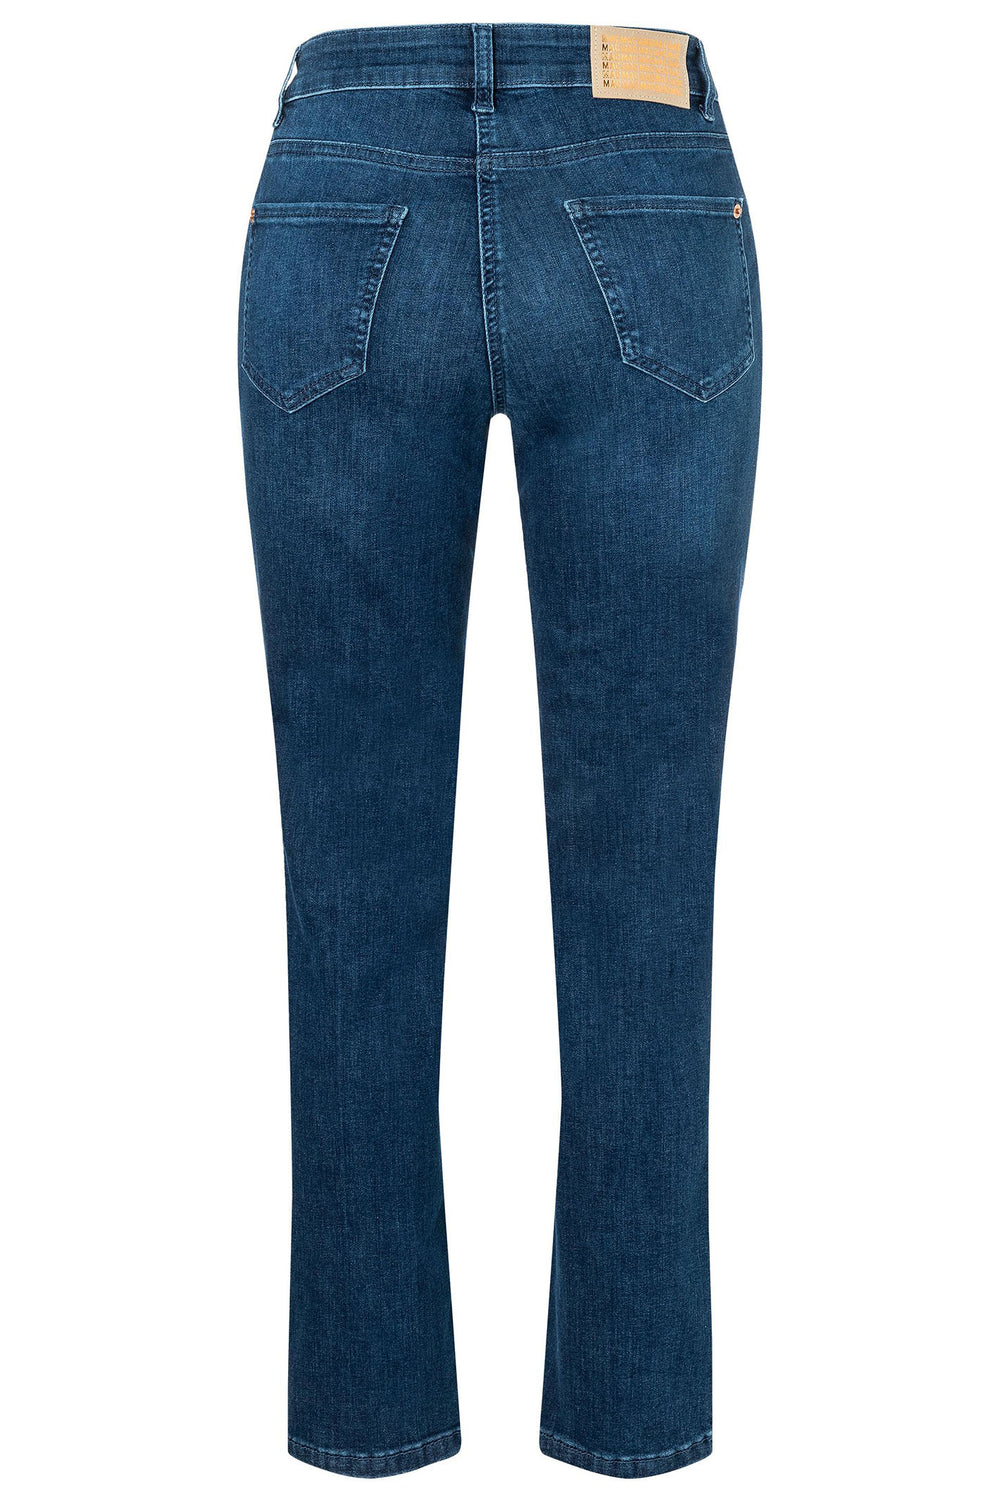 Mac 5024-90-0387 D533 Melanie Basic Indigo Authentic Stretch Denim Jeans - Shirley Allum Boutique